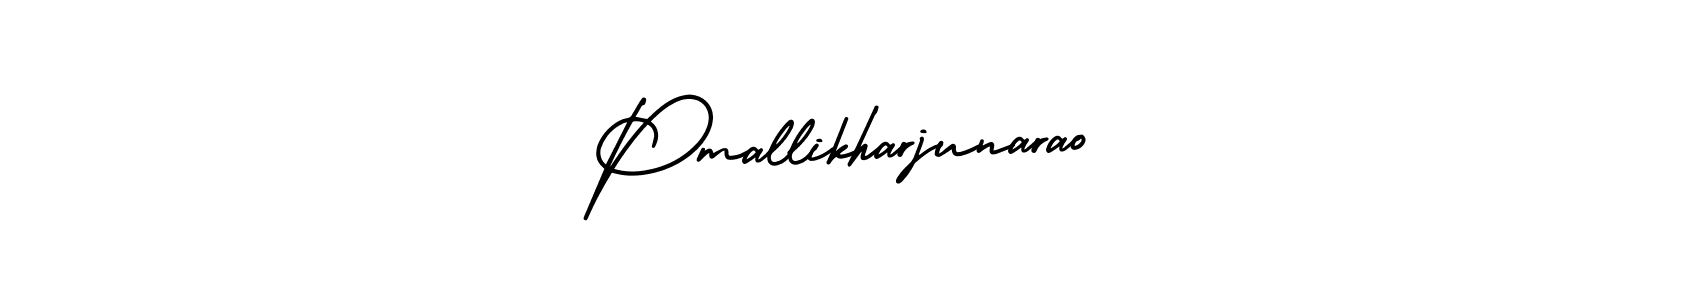 How to Draw Pmallikharjunarao signature style? AmerikaSignatureDemo-Regular is a latest design signature styles for name Pmallikharjunarao. Pmallikharjunarao signature style 3 images and pictures png